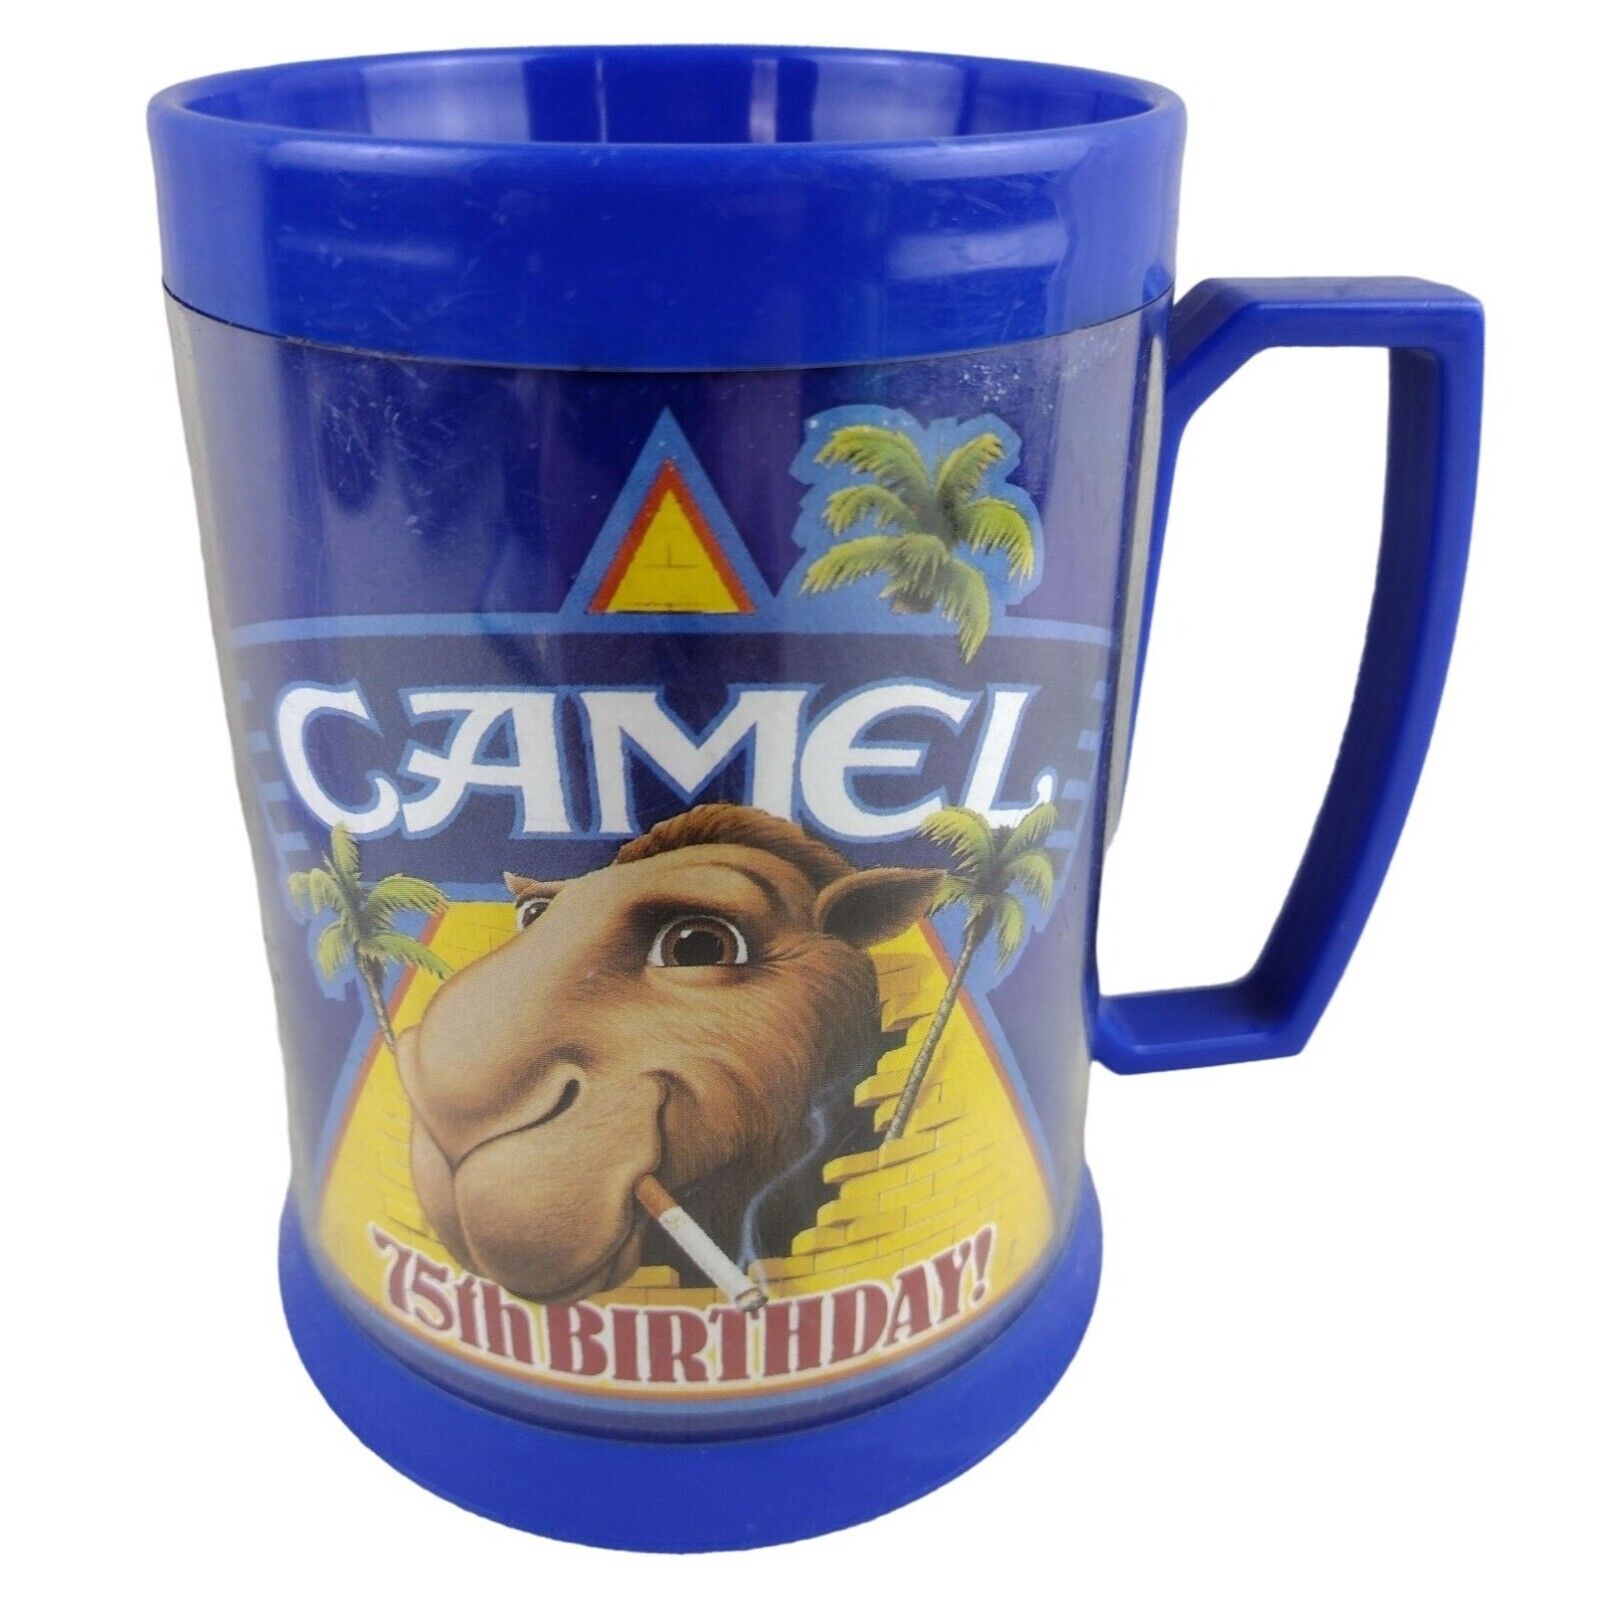 Joe Camel Cigarettes 75th Birthday Coffee Mug Thermo Serv Vintage Collectible